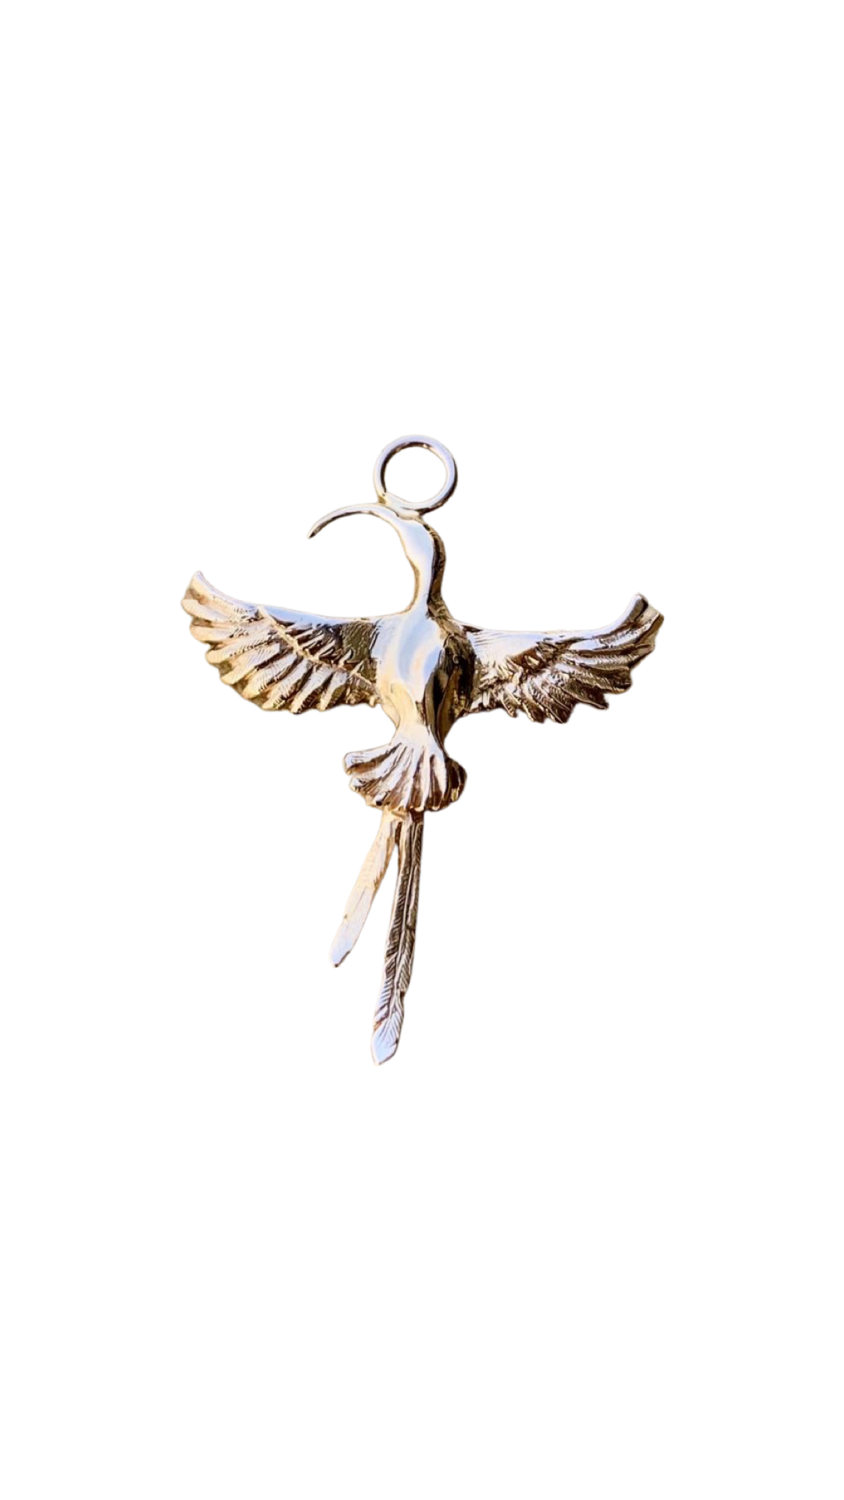 Sunbird in Flight Necklace Charm